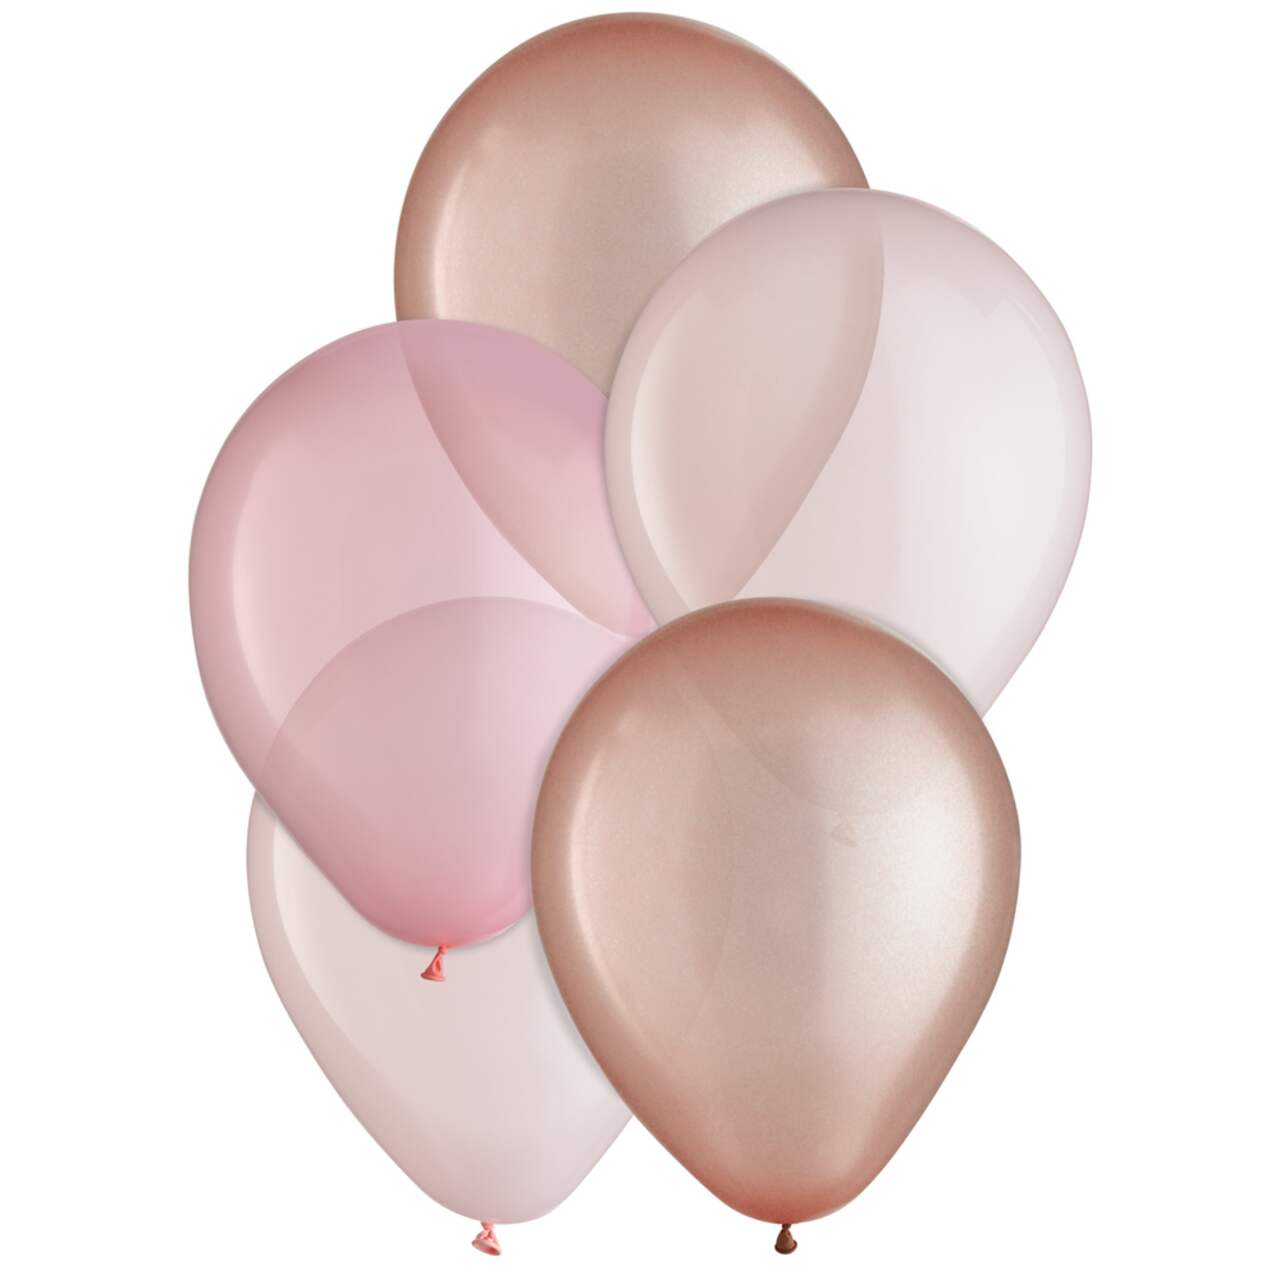 Ballons en latex or rose, paq. 15, 11 po